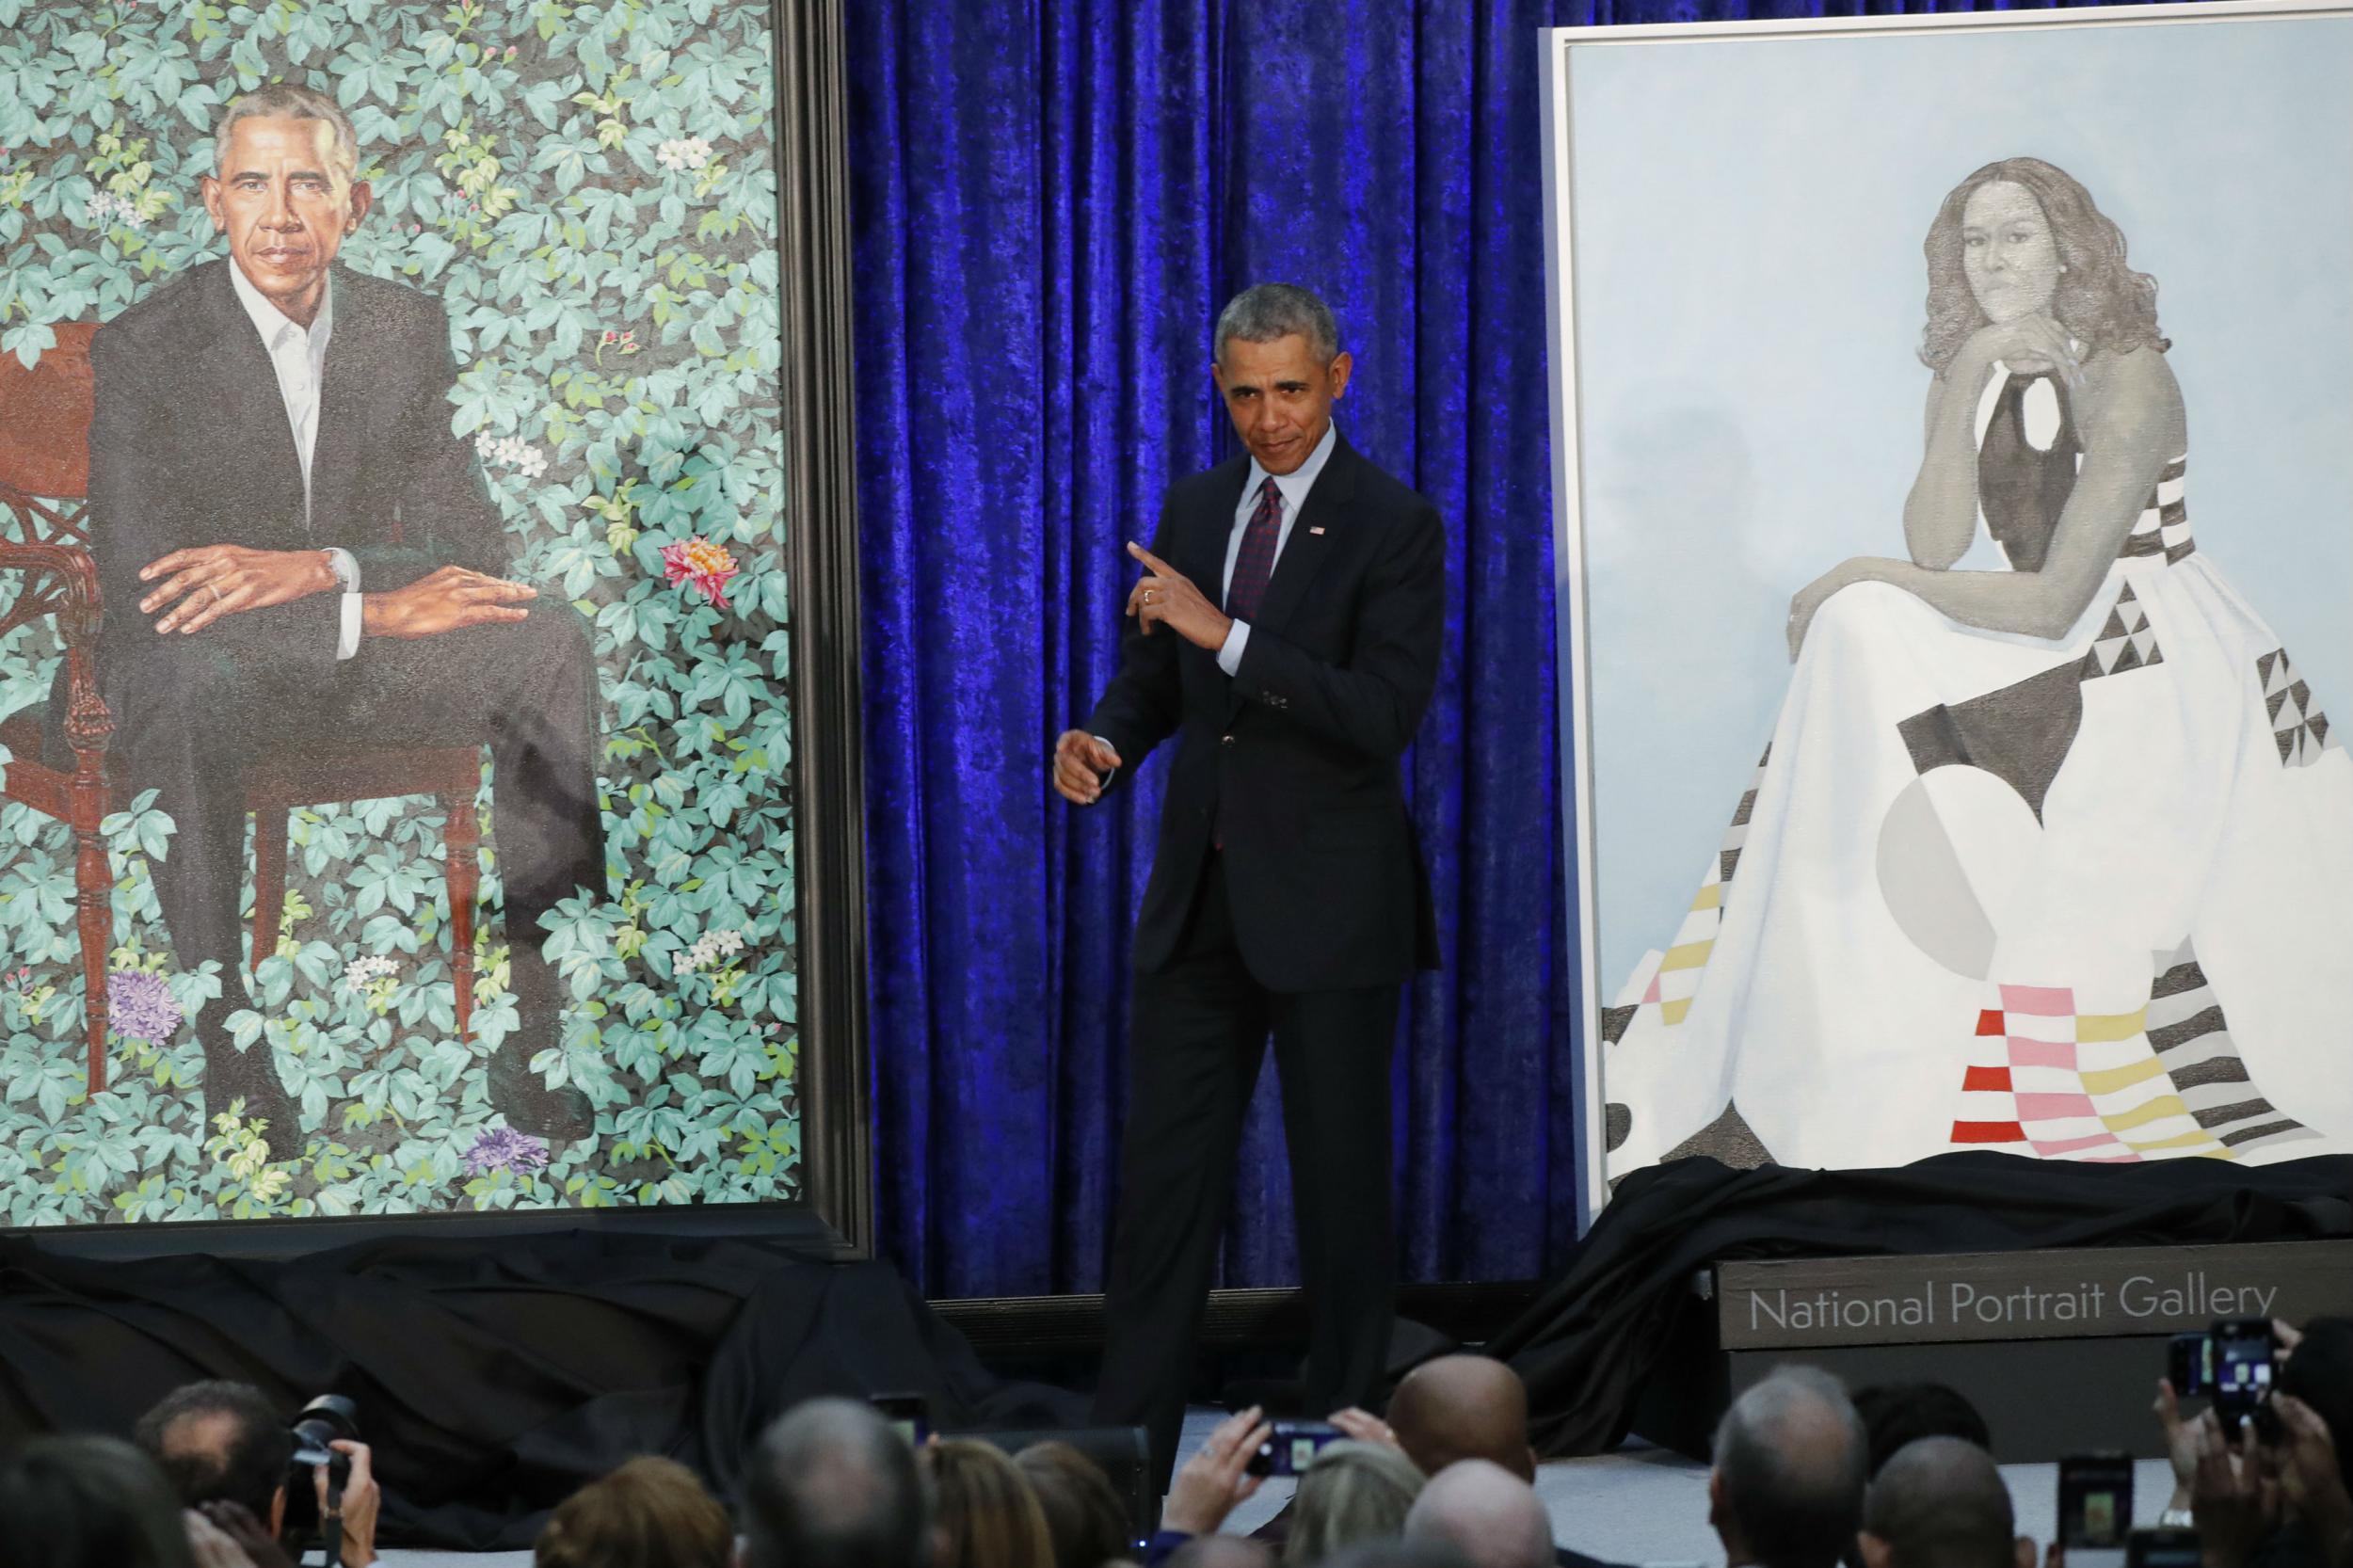 The former president said he felt his portrait was ‘pretty sharp’